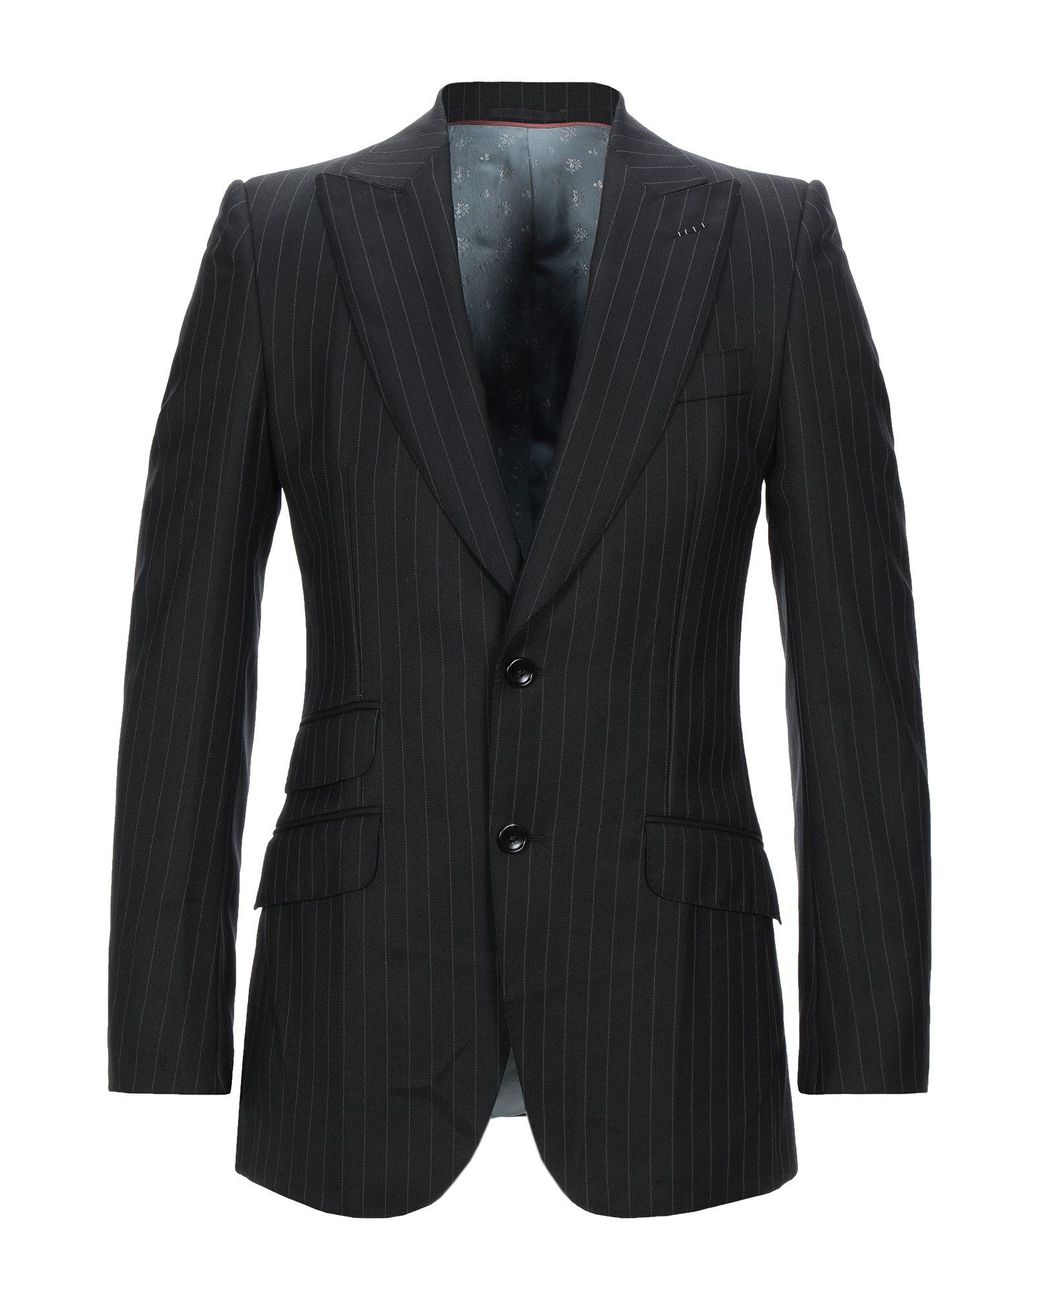 Gucci Suit Jacket in Black for Men - Lyst